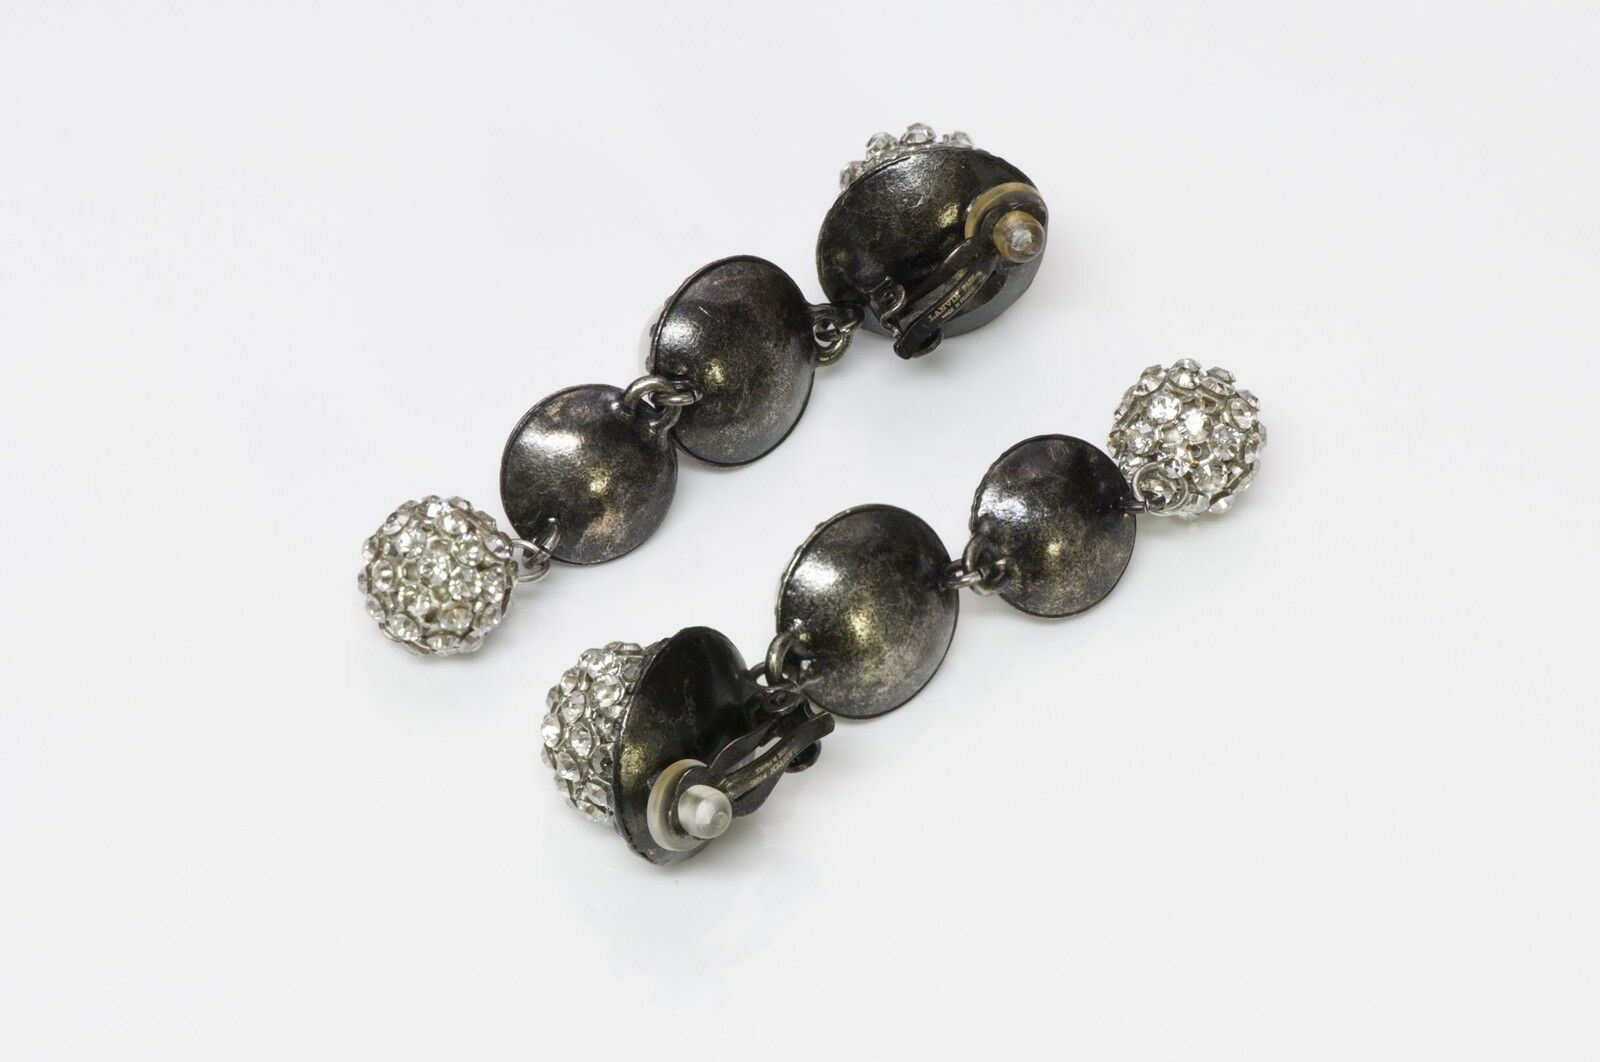 Lanvin Pearl Crystal Drop Earrings